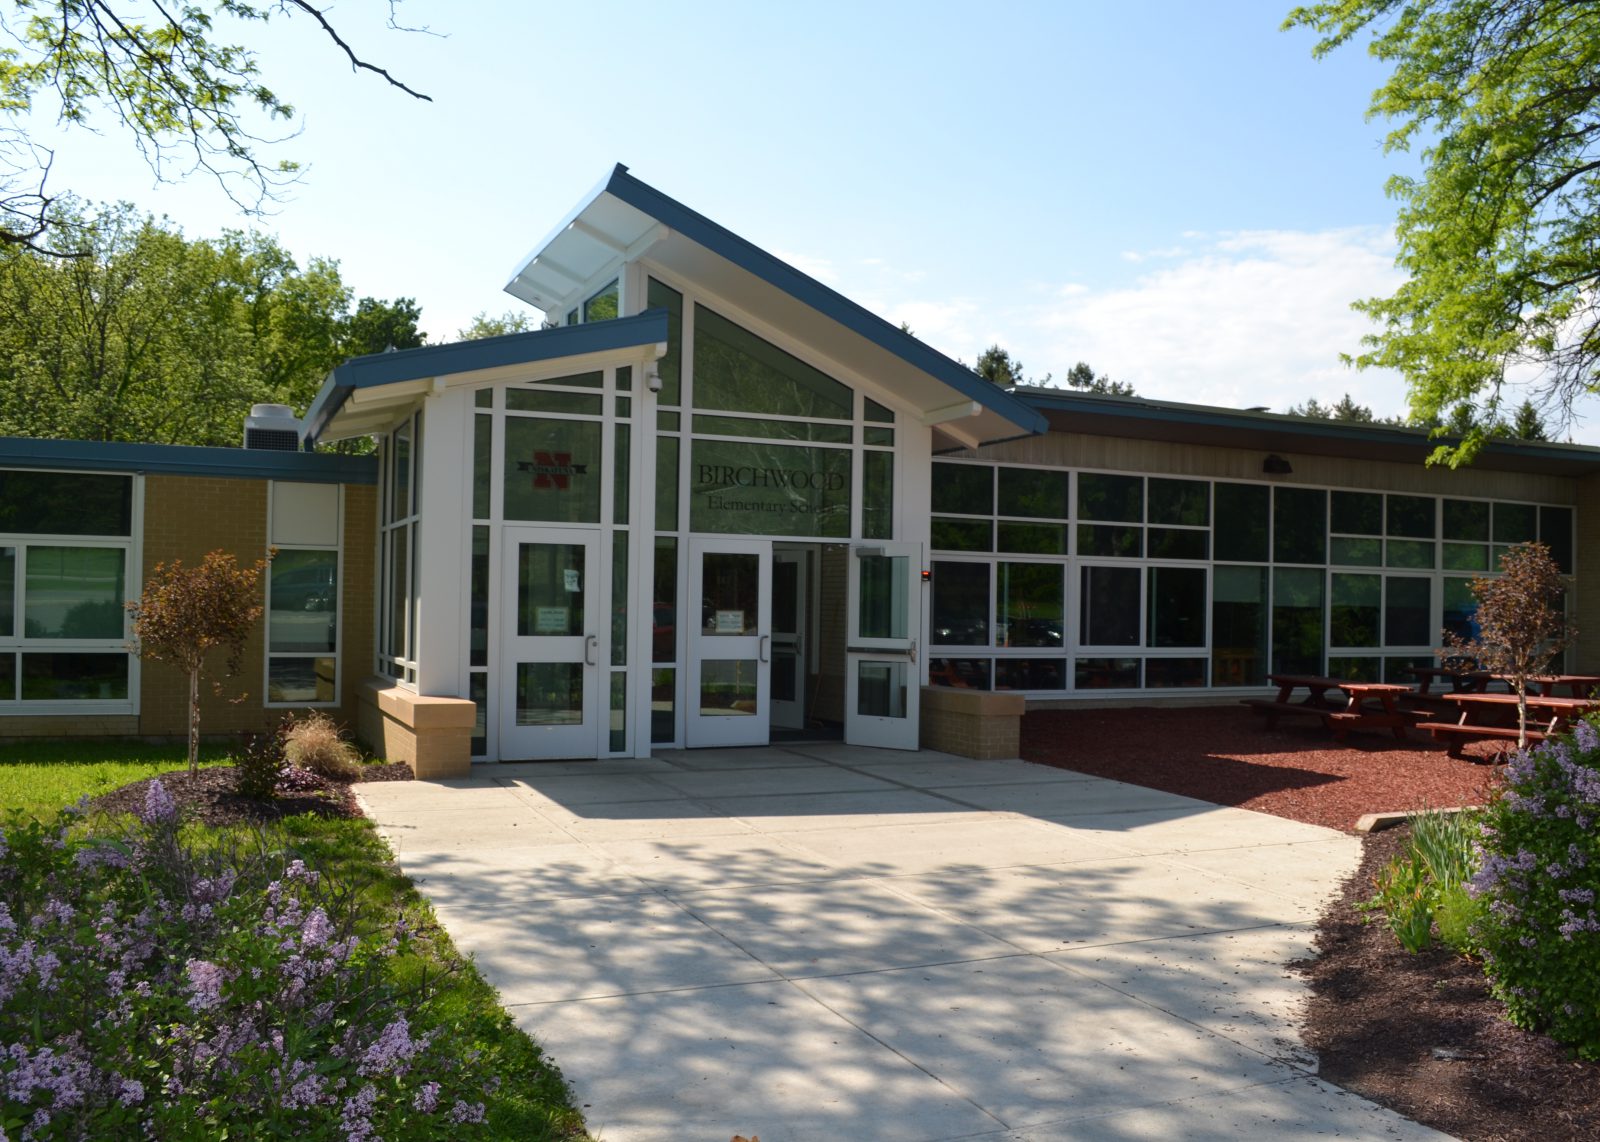 The main entrance of Birchwood Elementary School